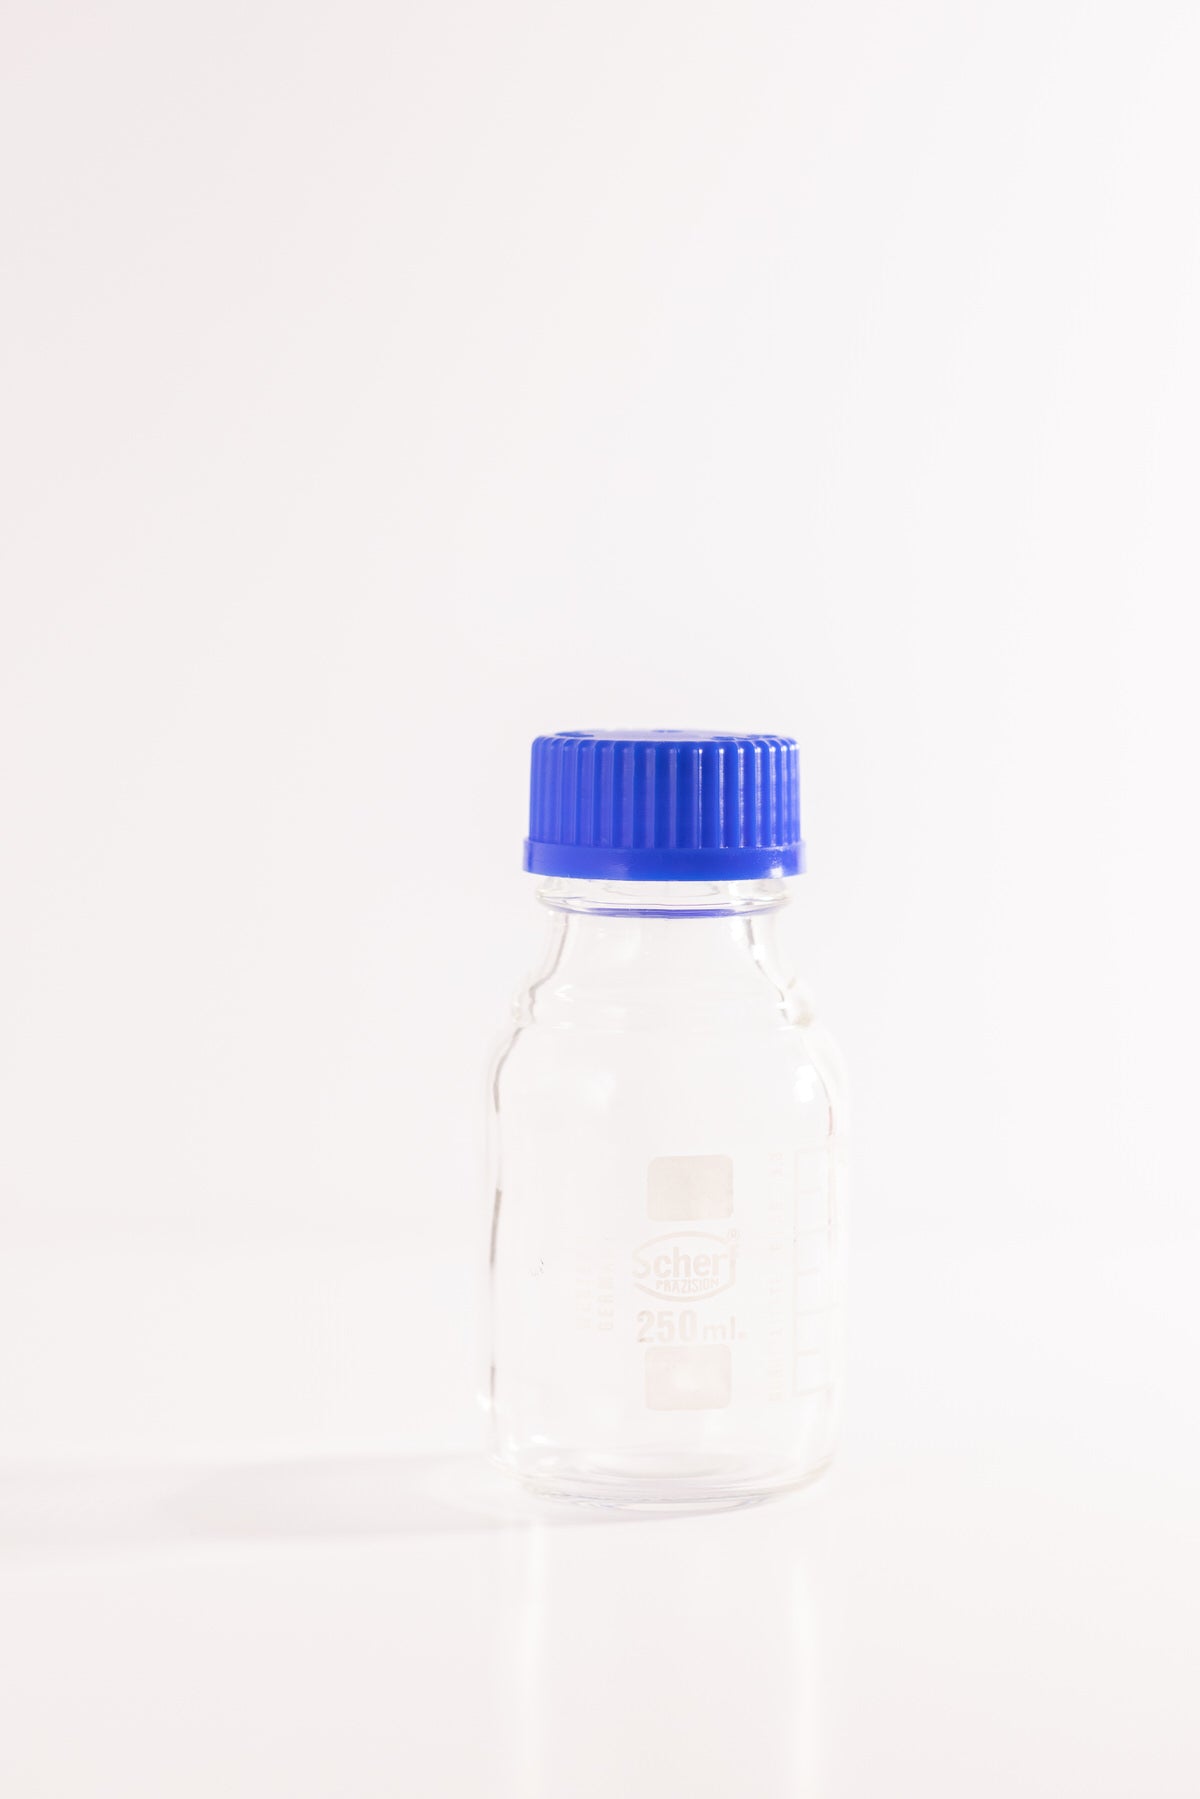 Schott Duran , Laboratory Bottle 250ml with GL45 Screw Cap Air Tight Seal